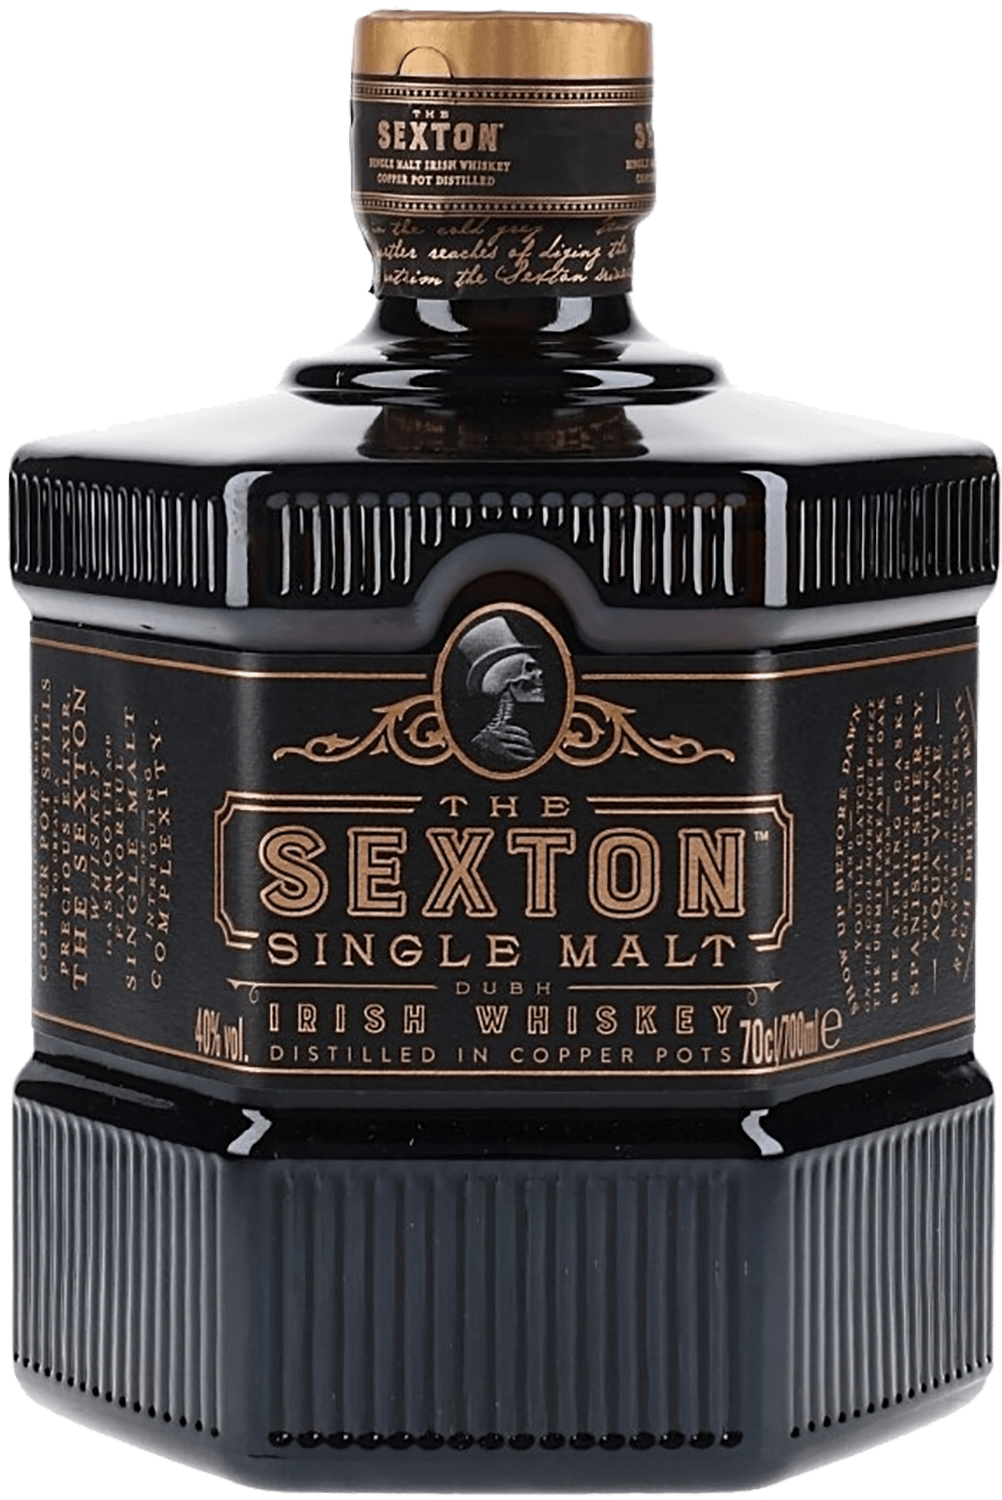 The Sexton Single Malt Irish Whiskey west cork glengarriff series bog oak charred cask single malt irish whiskey